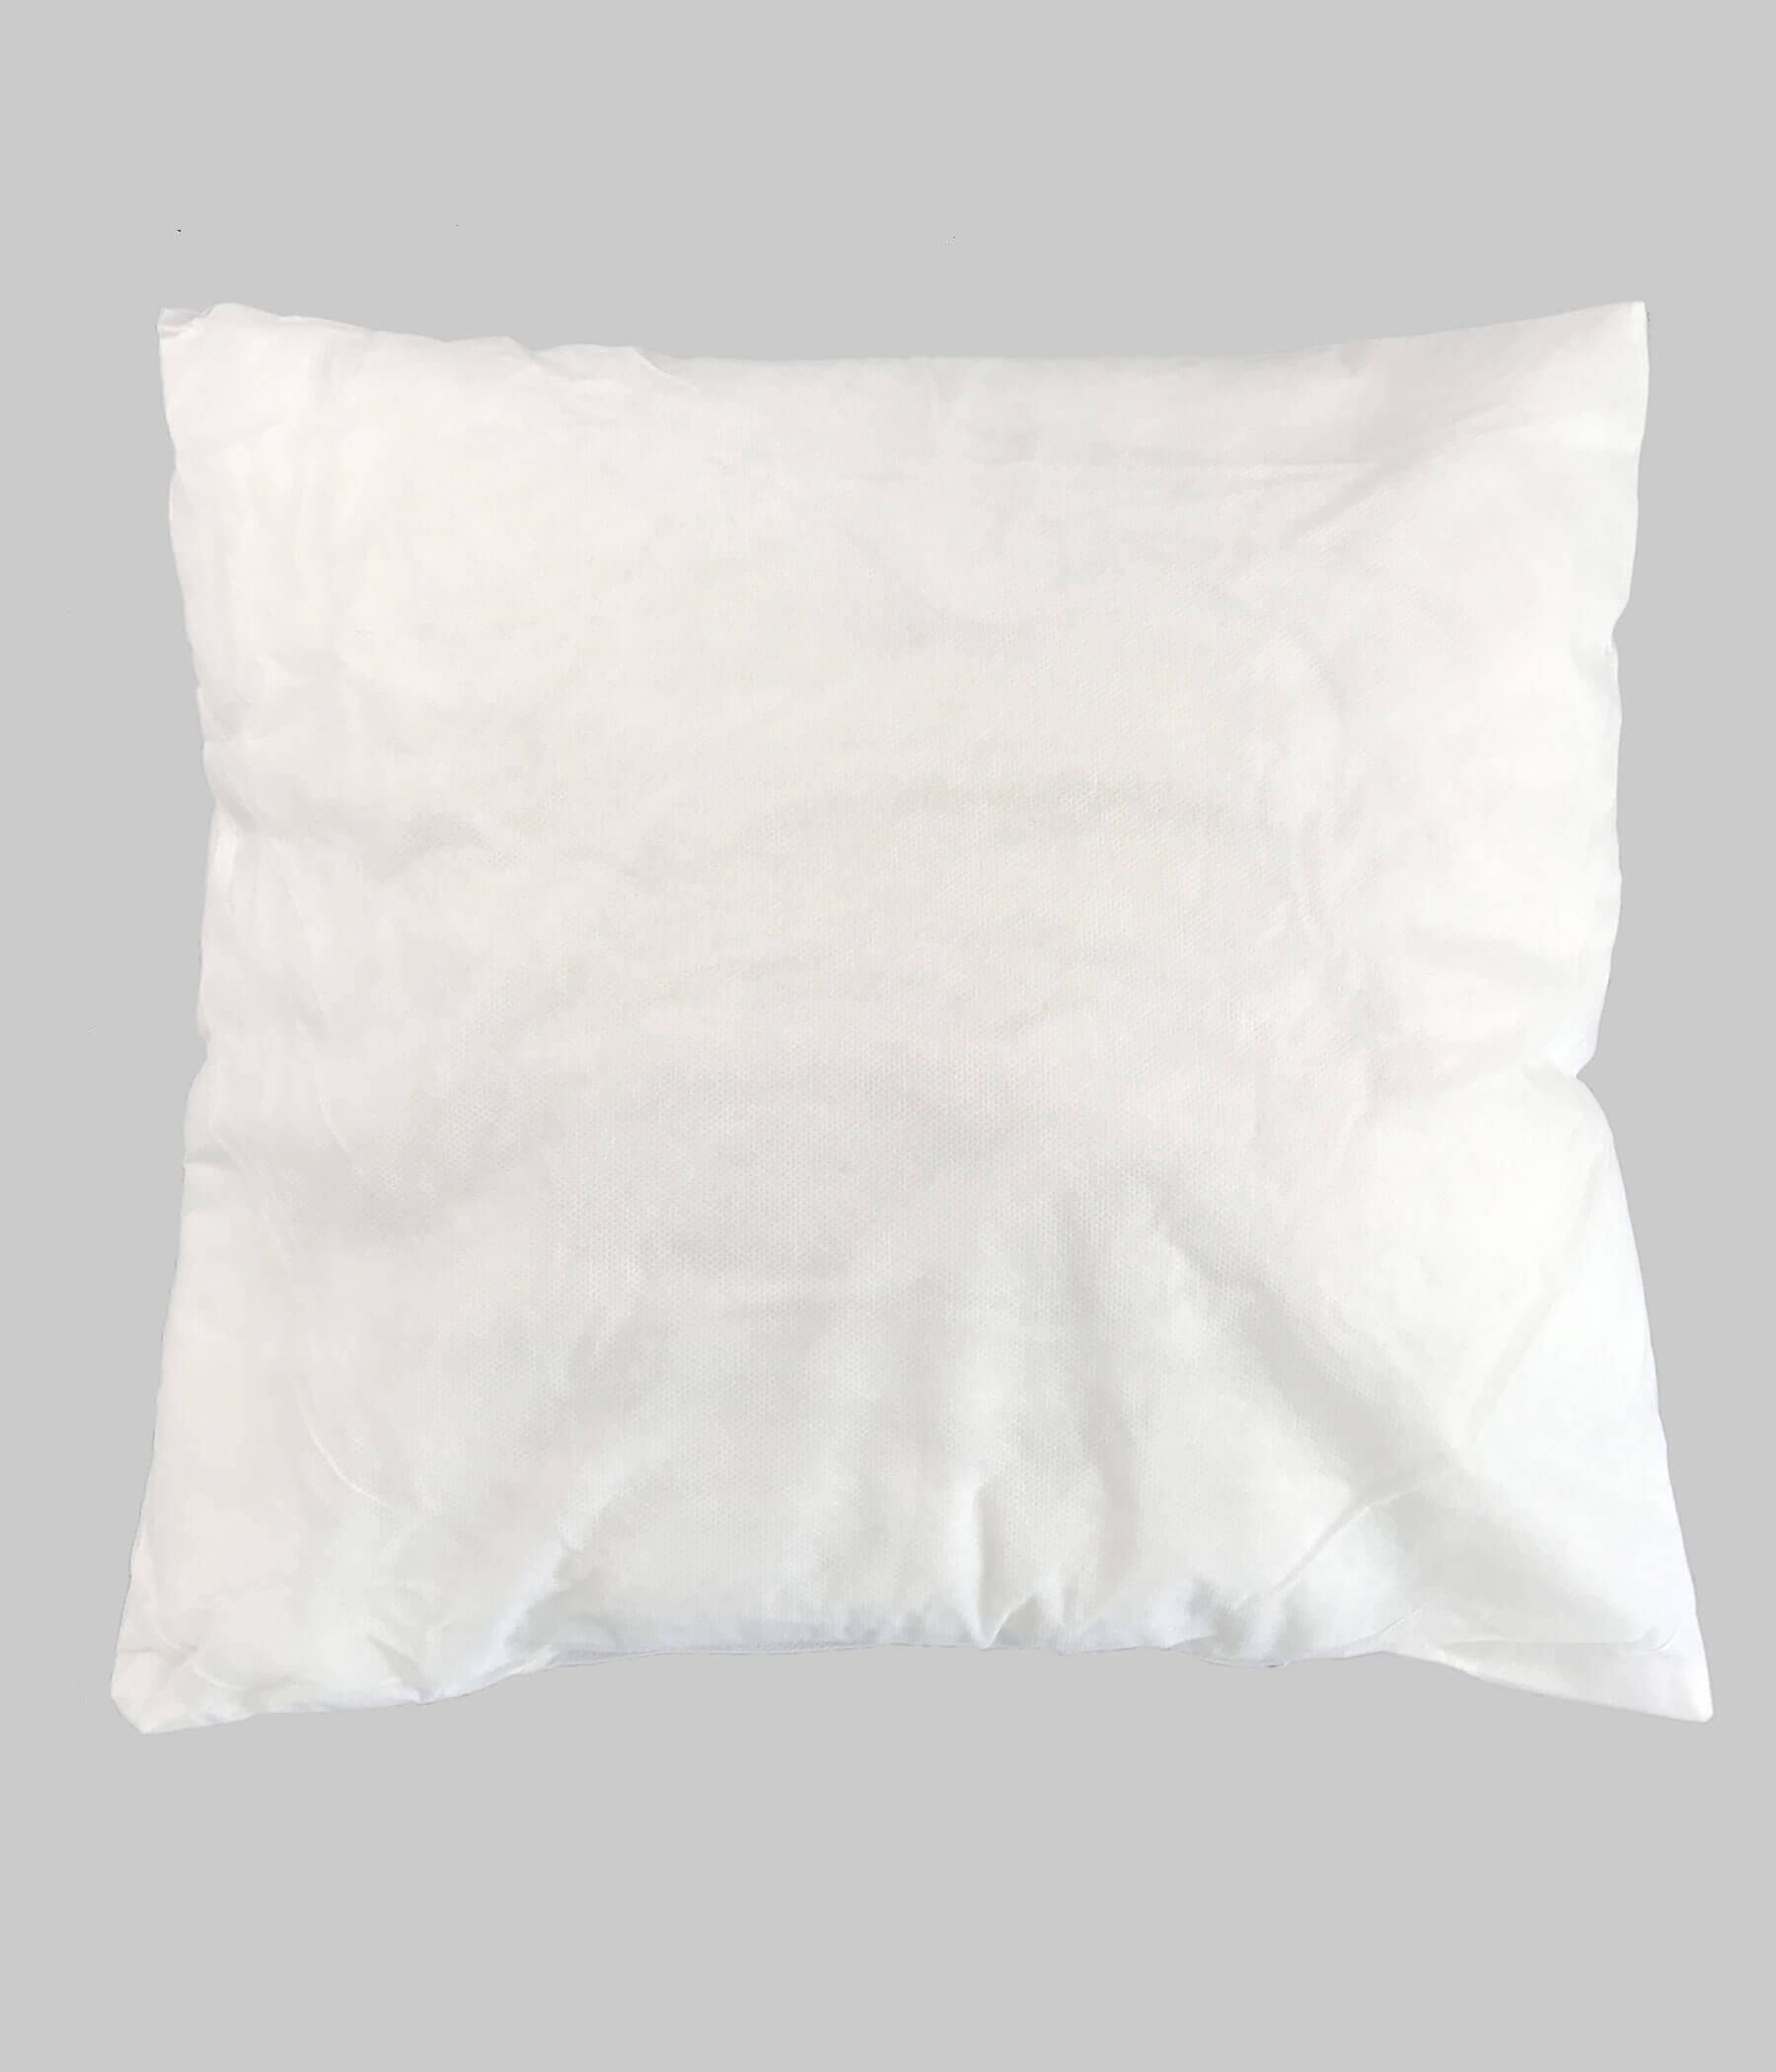 Cushion Insert - 45 x 45cm